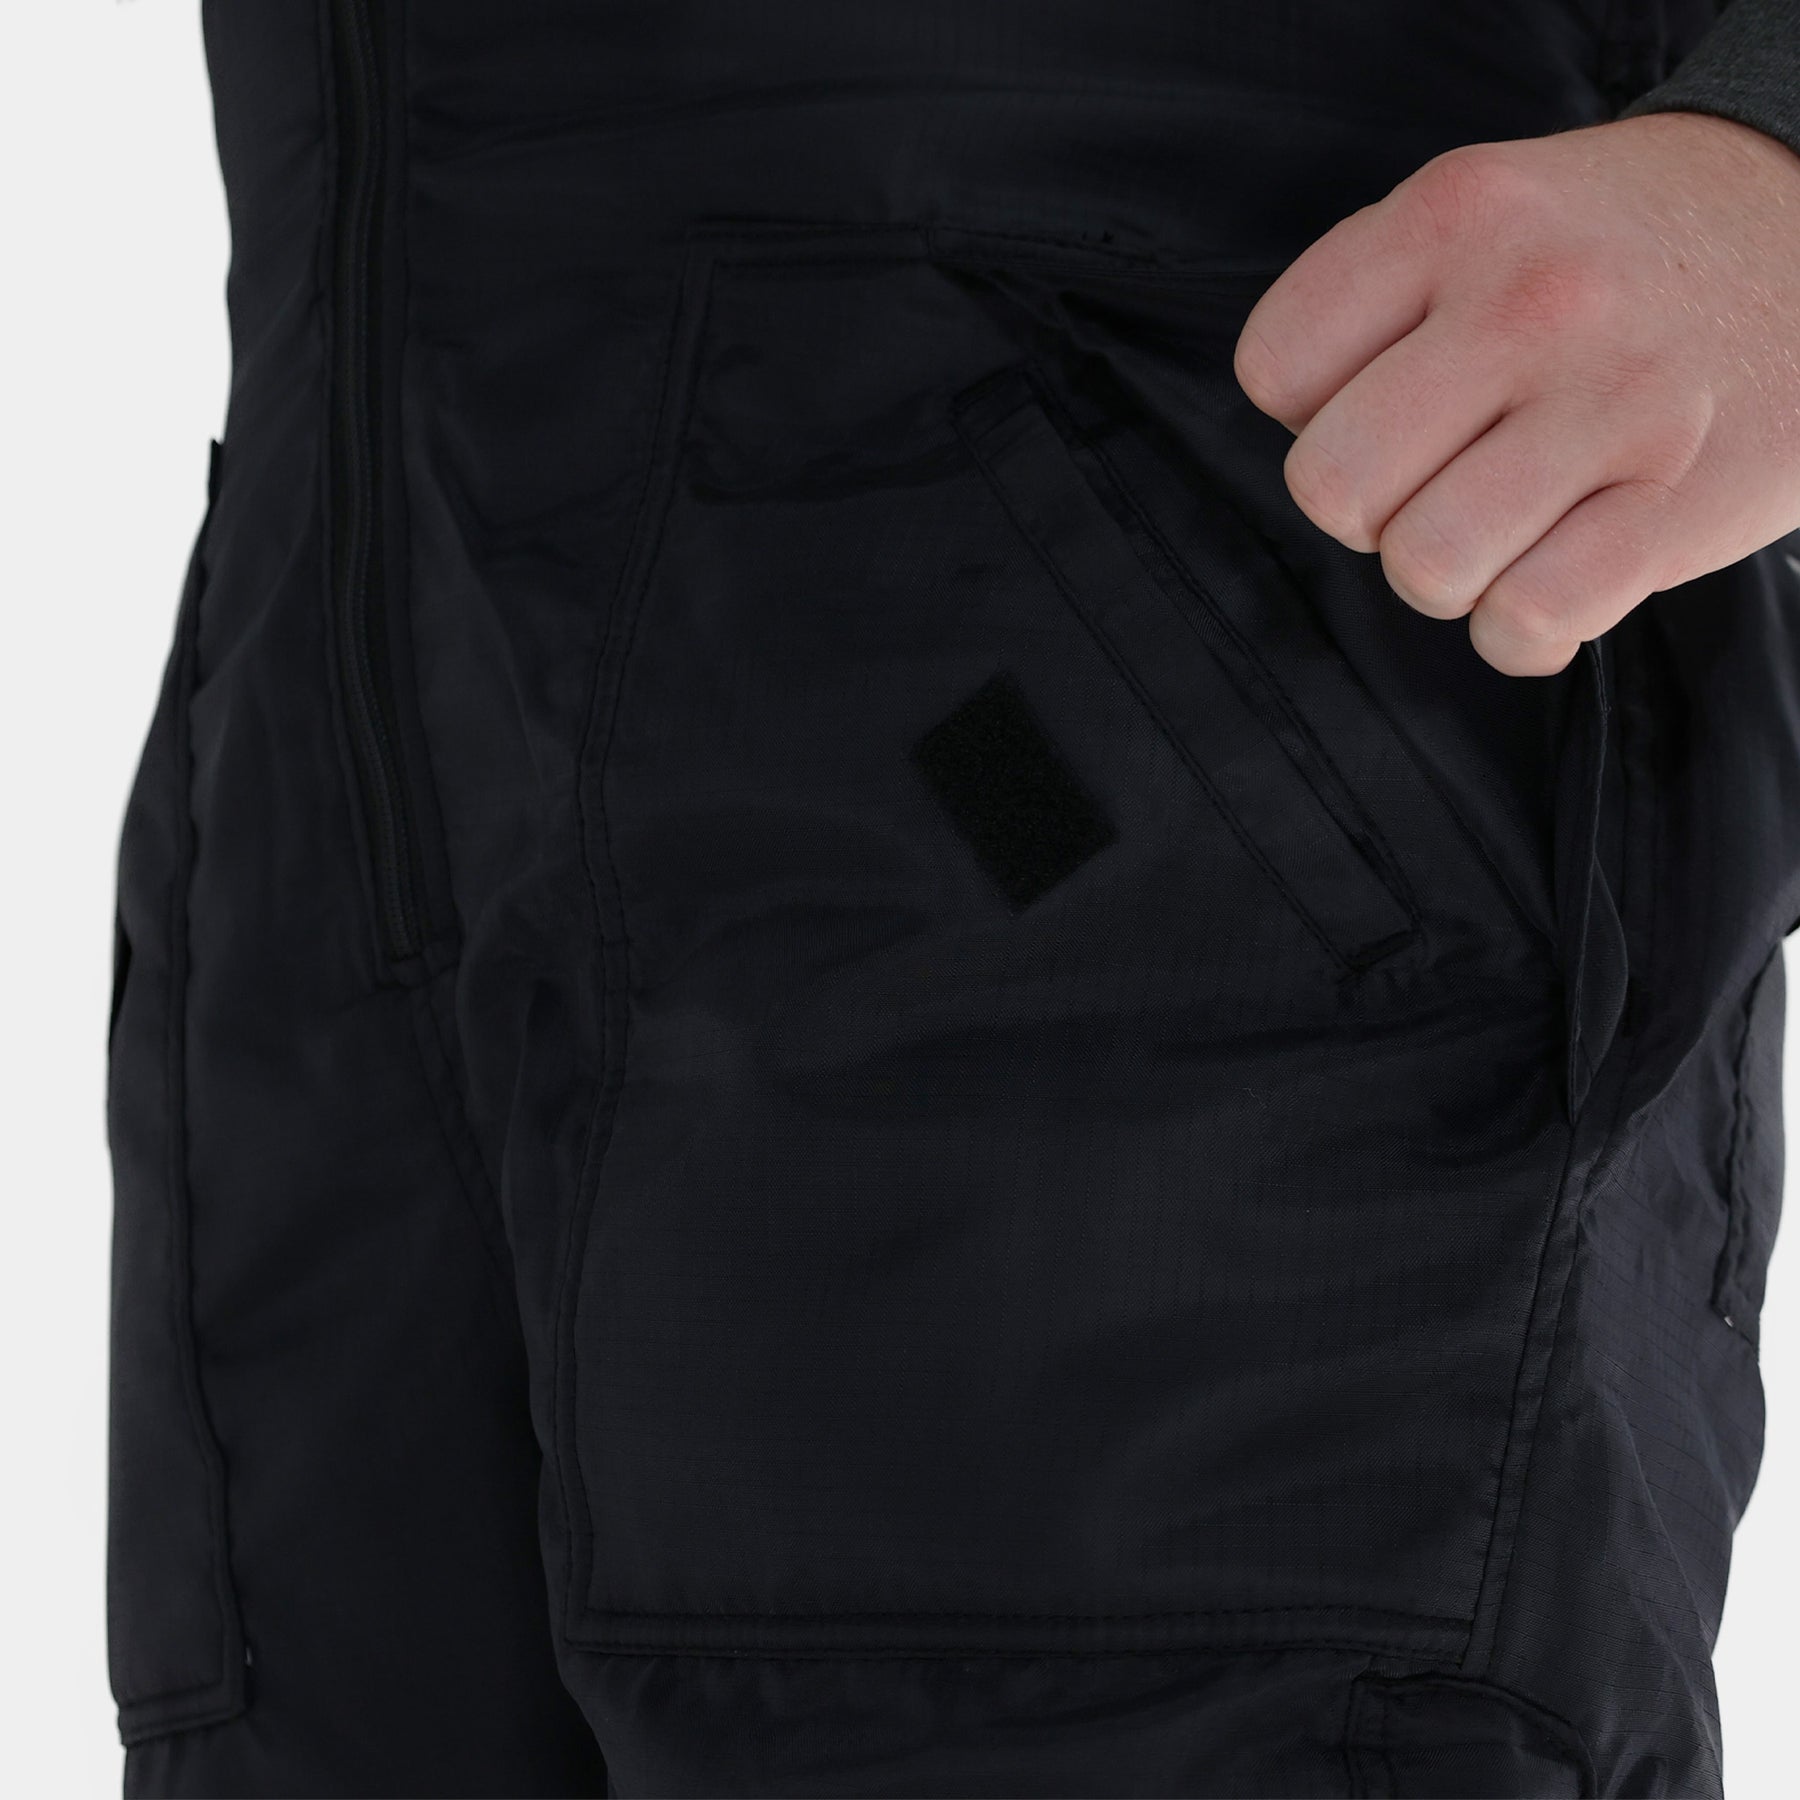 Reflex Bib Overalls - Black Insulated Workwear for Cold/Sub-Zero – Epik ...